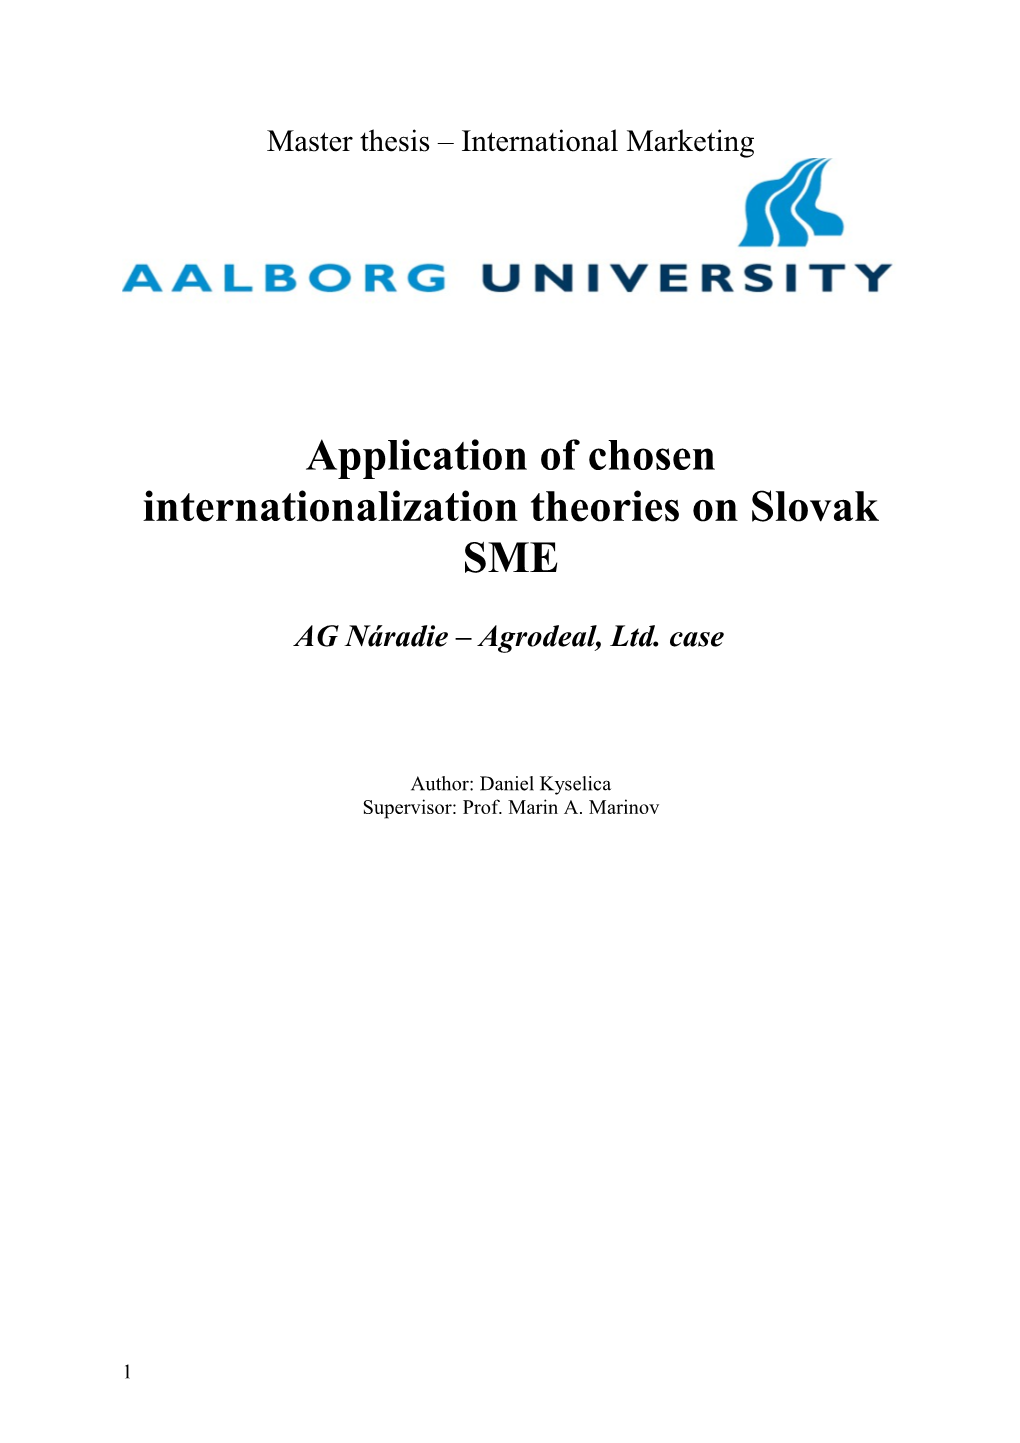 Application of Chosen Internationalization Theories on Slovak SME